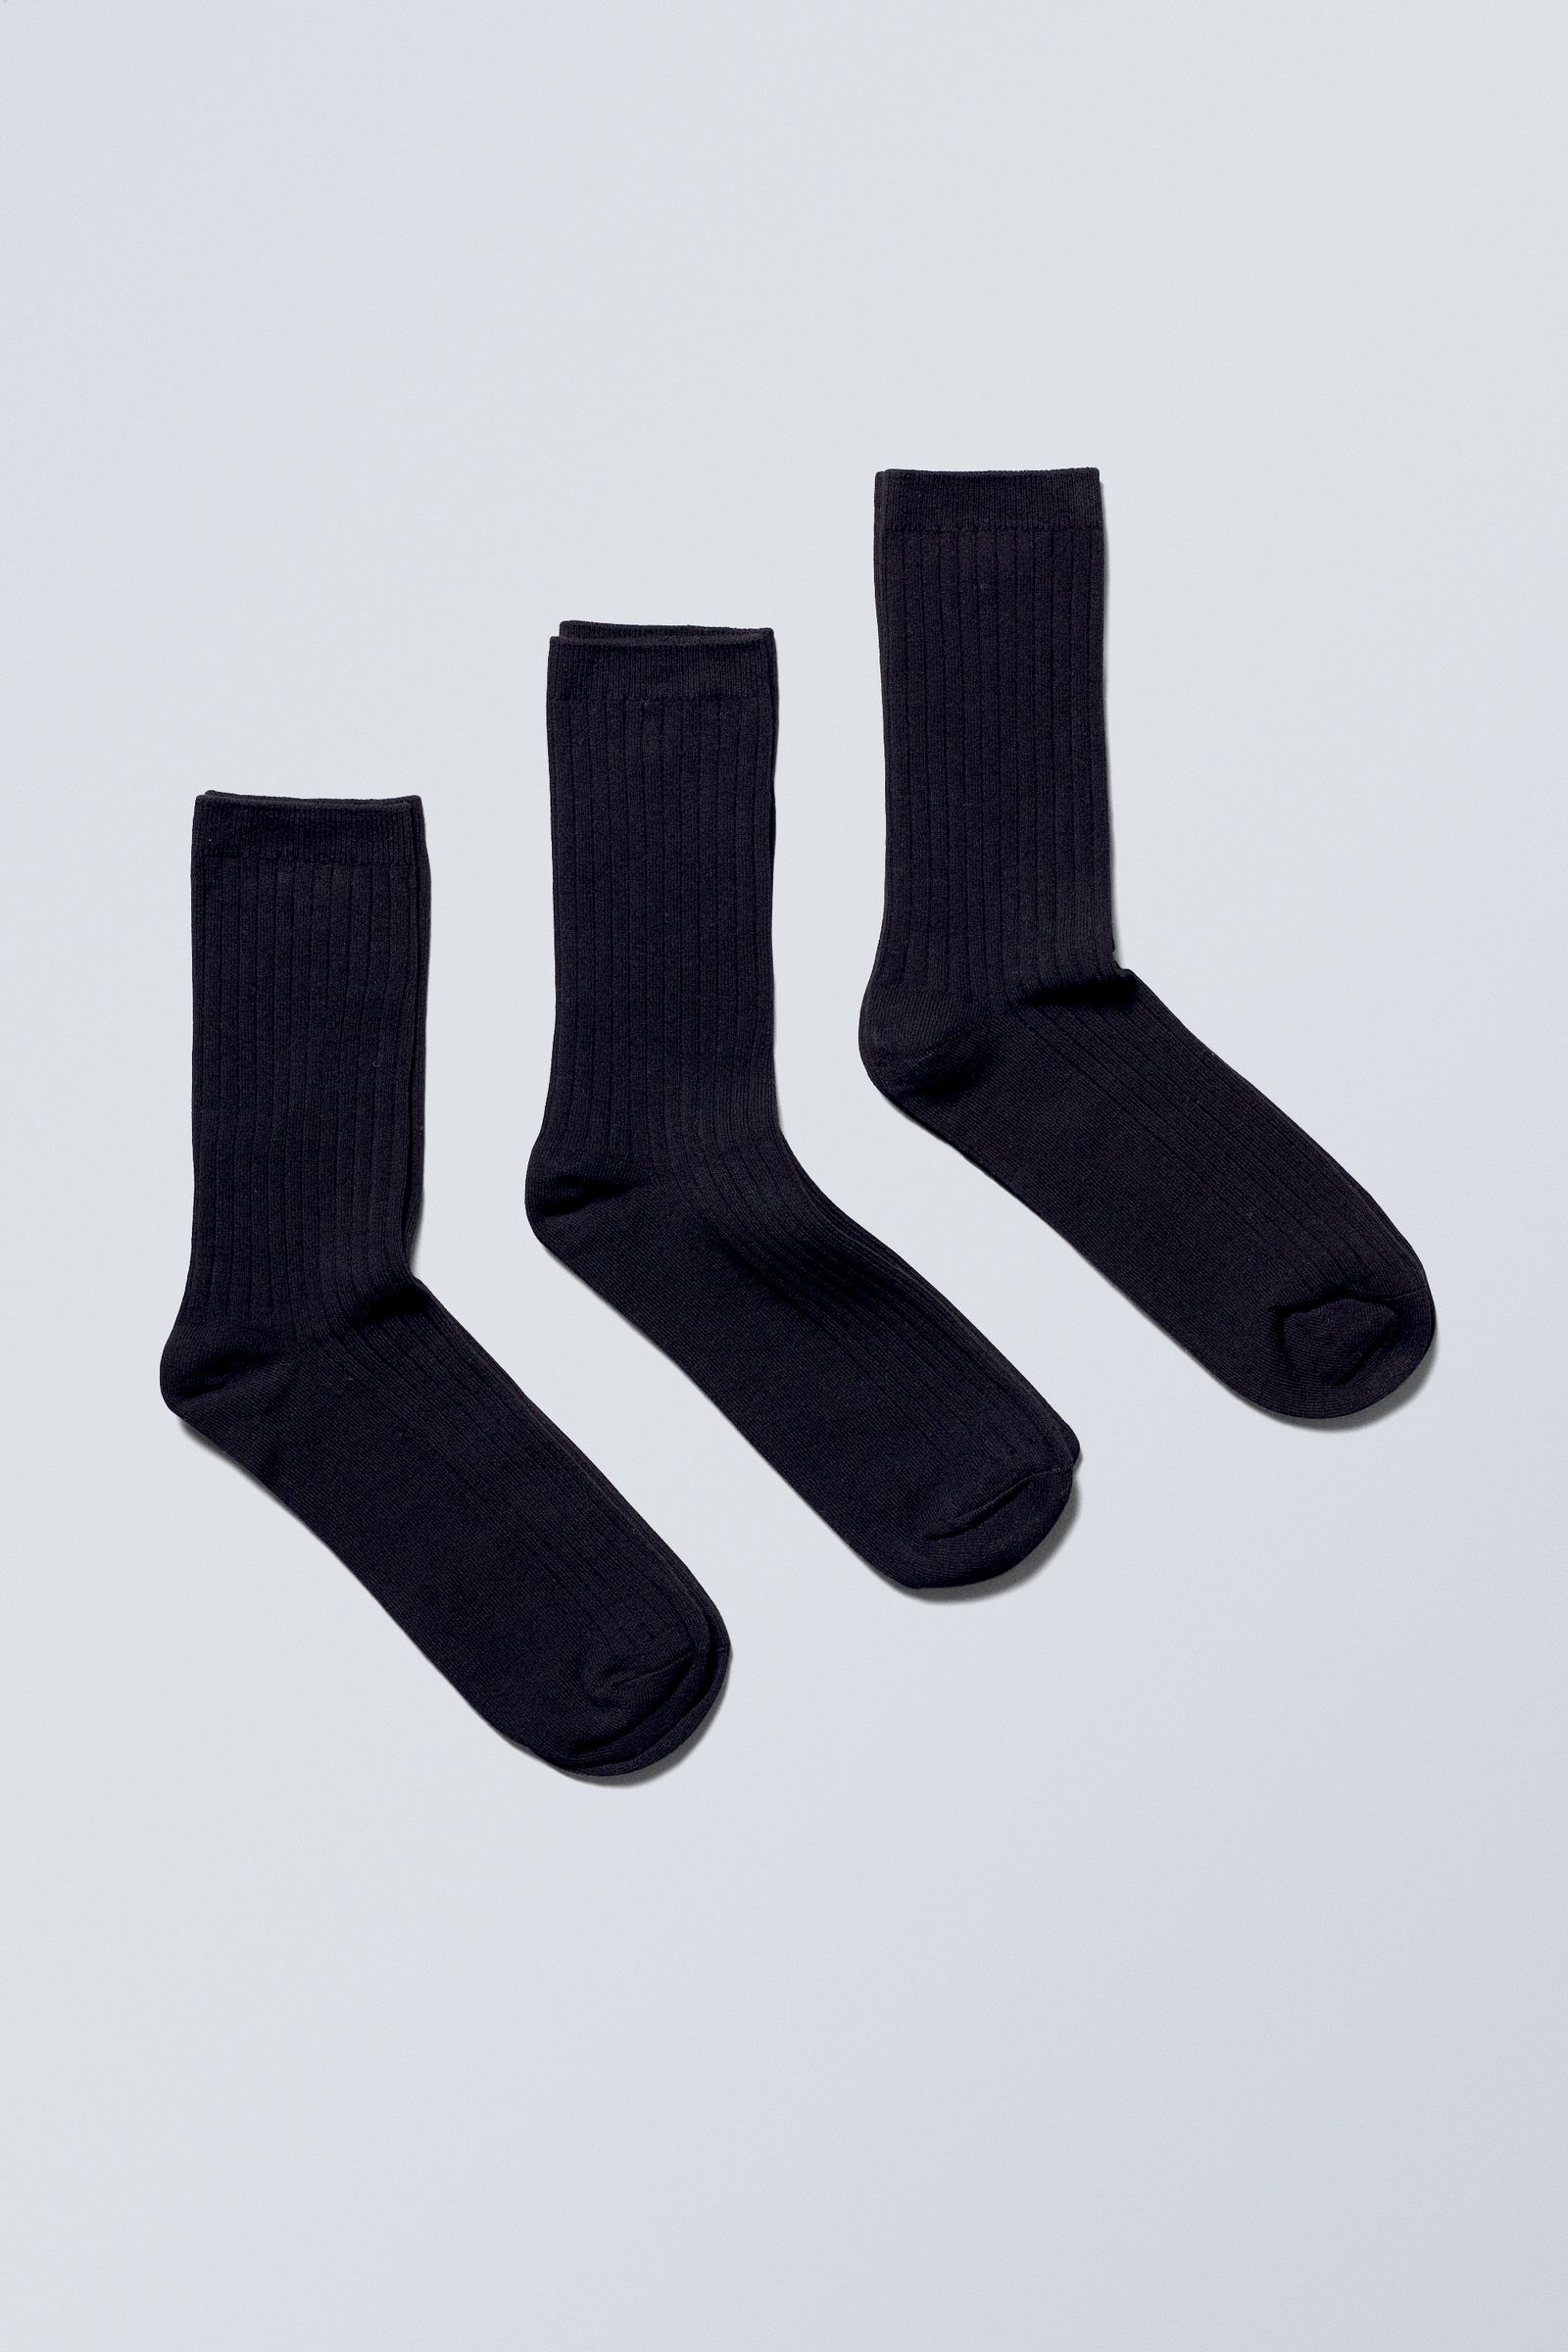 #272628 - 3-pack Rib Socks